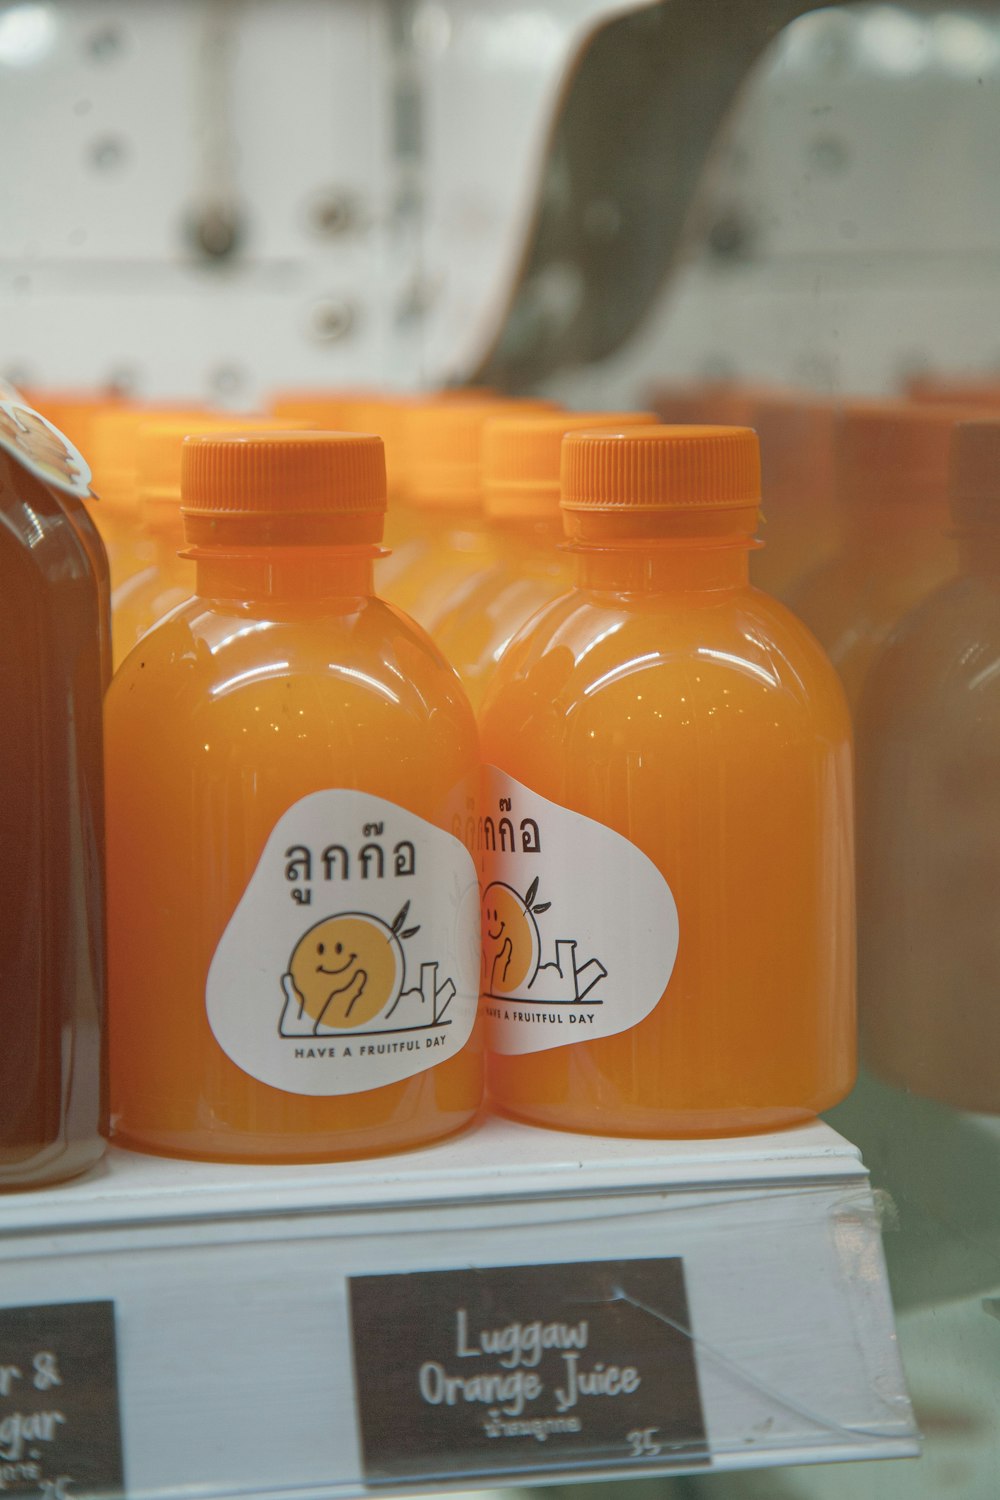 bottles of orange juice on display in a store